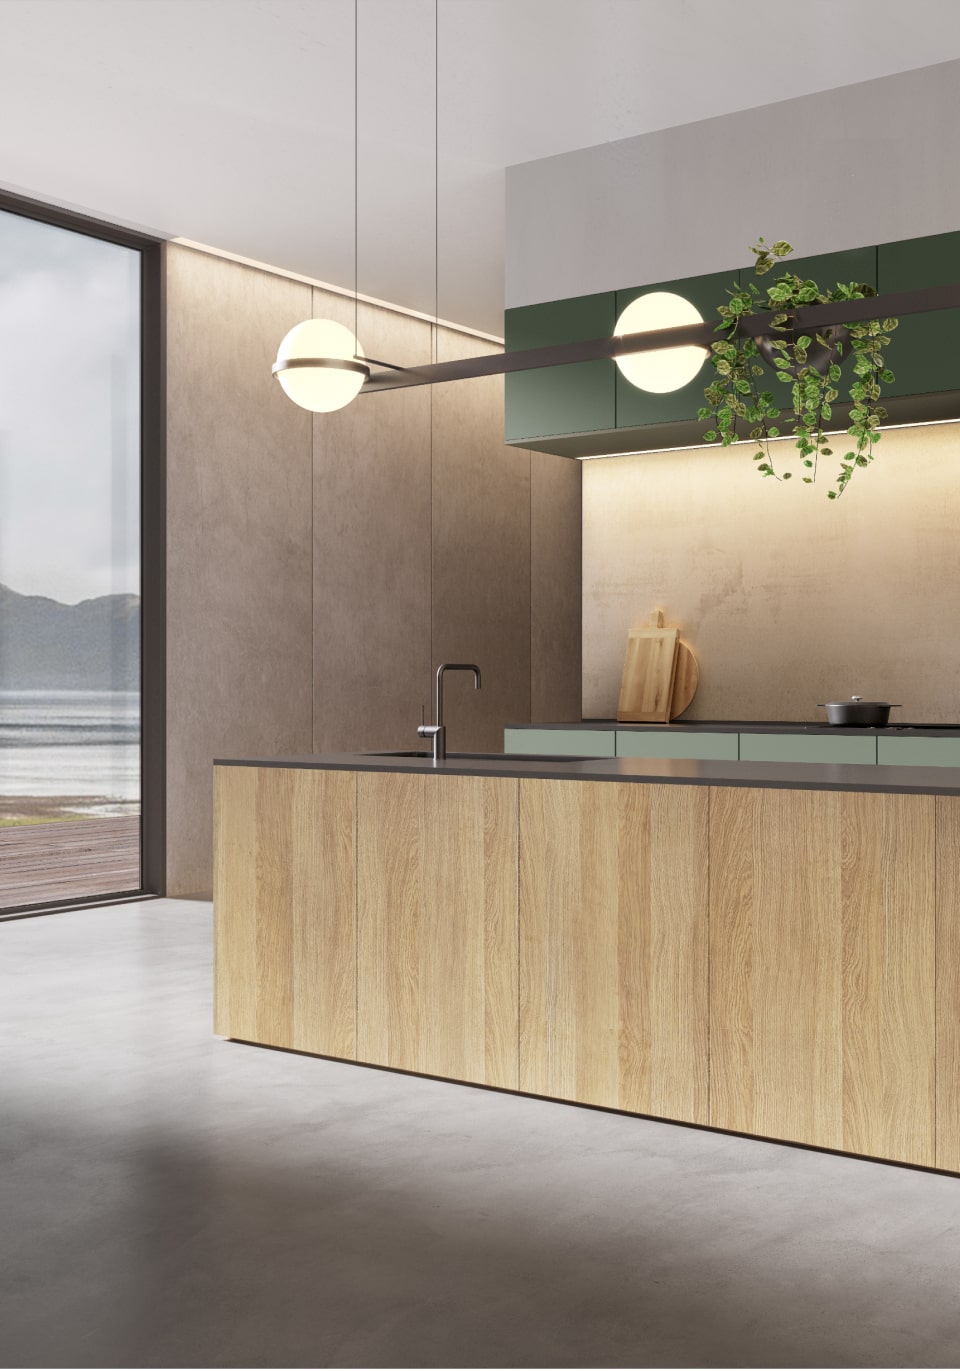 Green and woodgrain kitchen idea